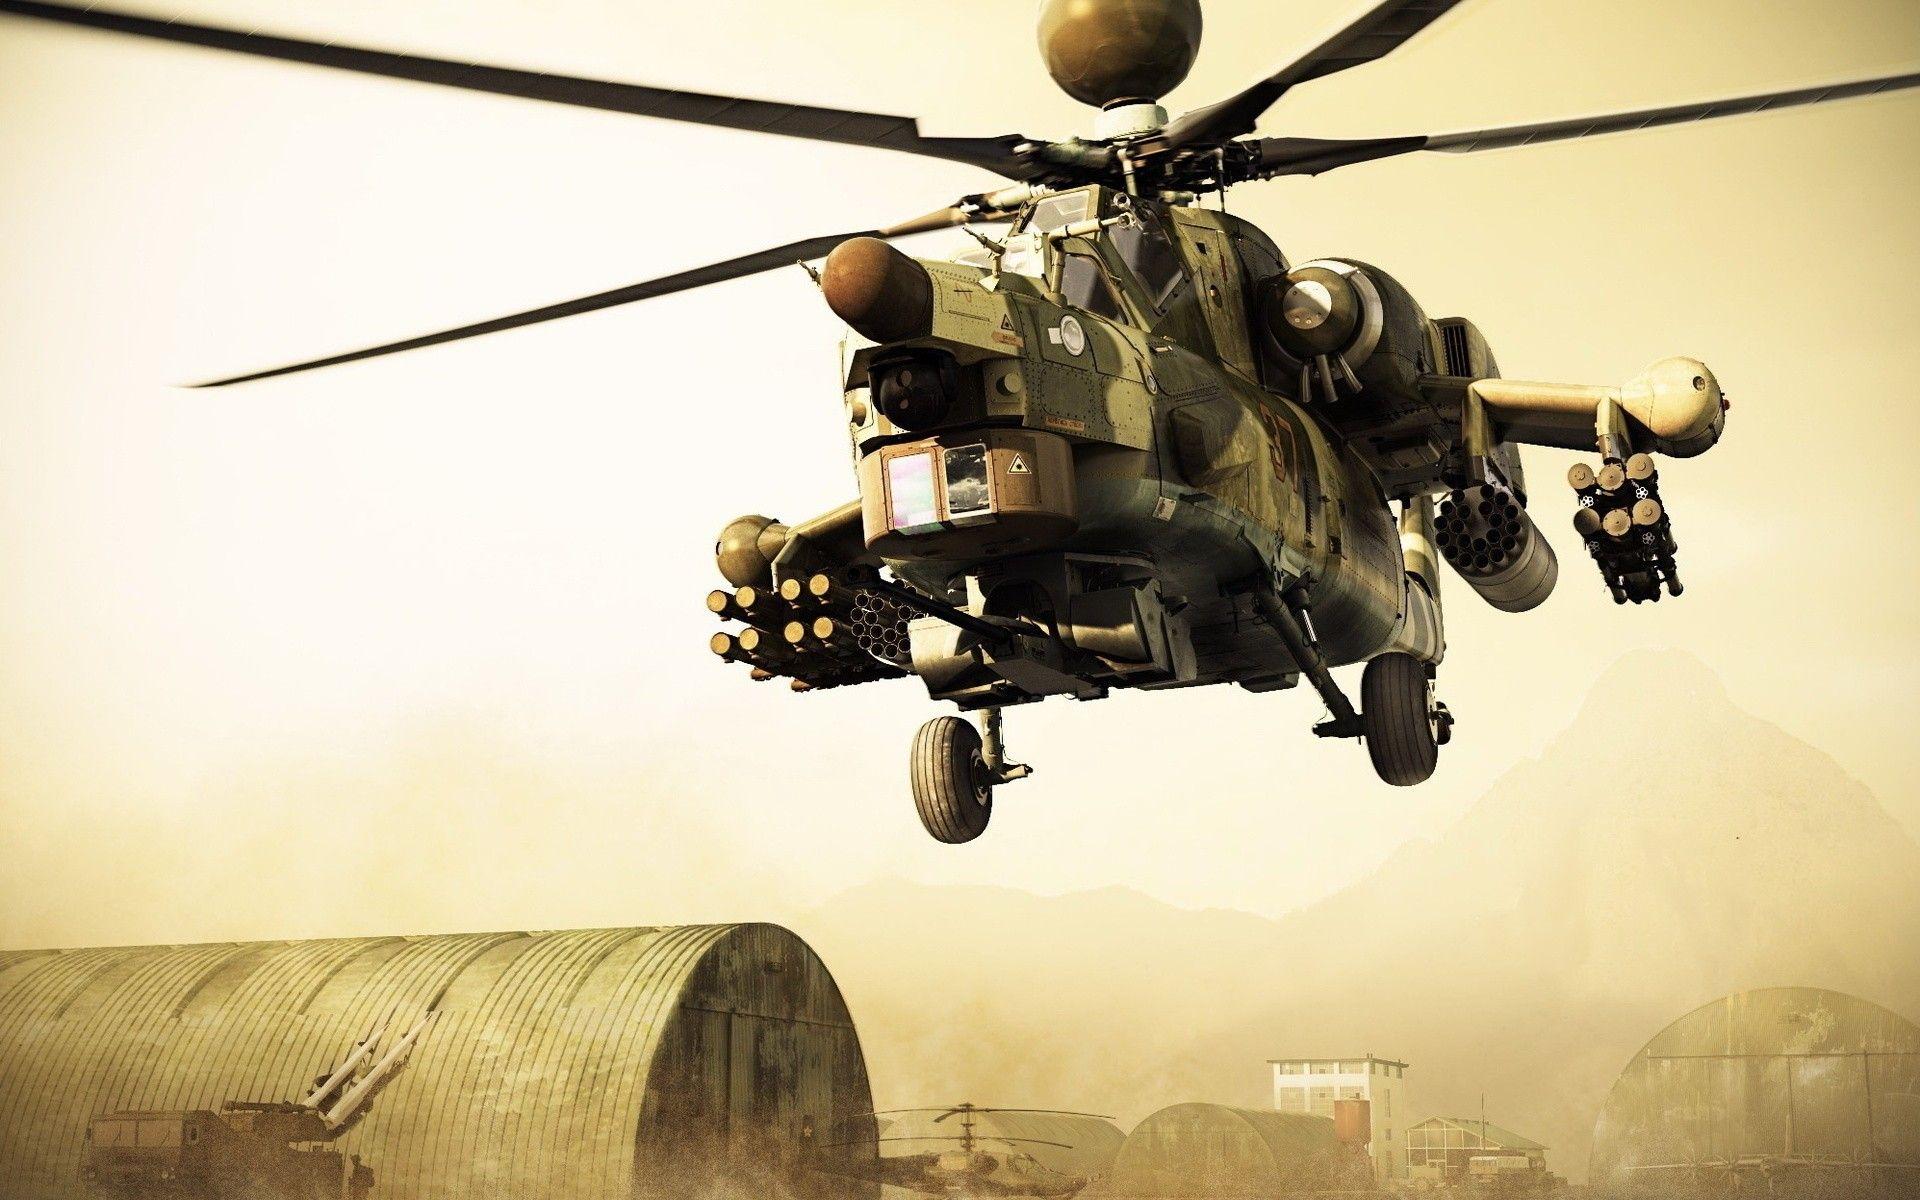 AmazingPict.com. Military Helicopters Background Image